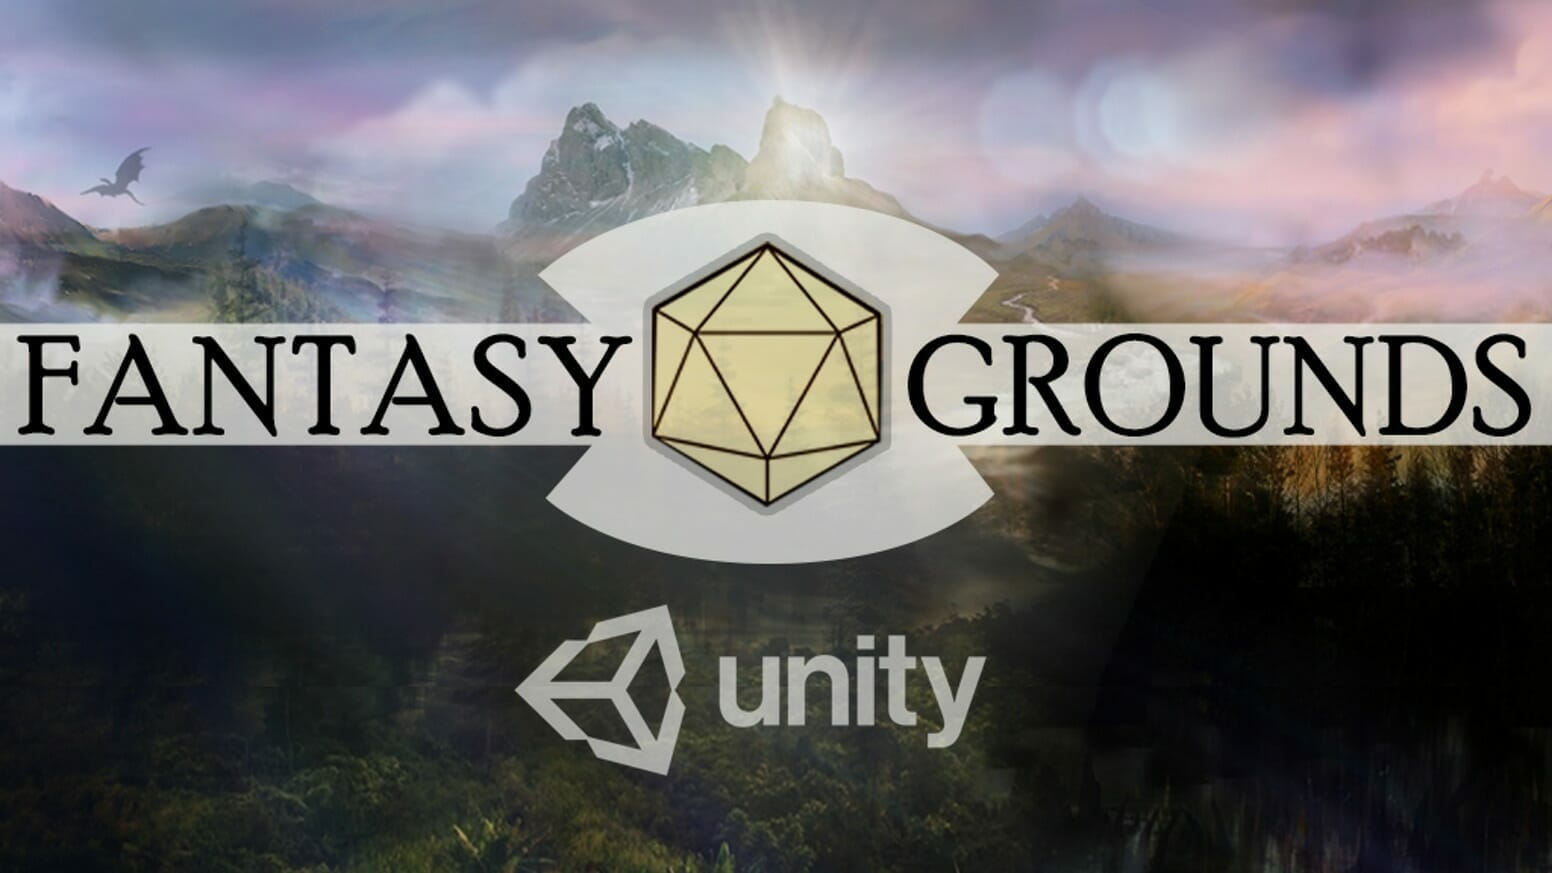 fantasy-Grounds-unity.jpg